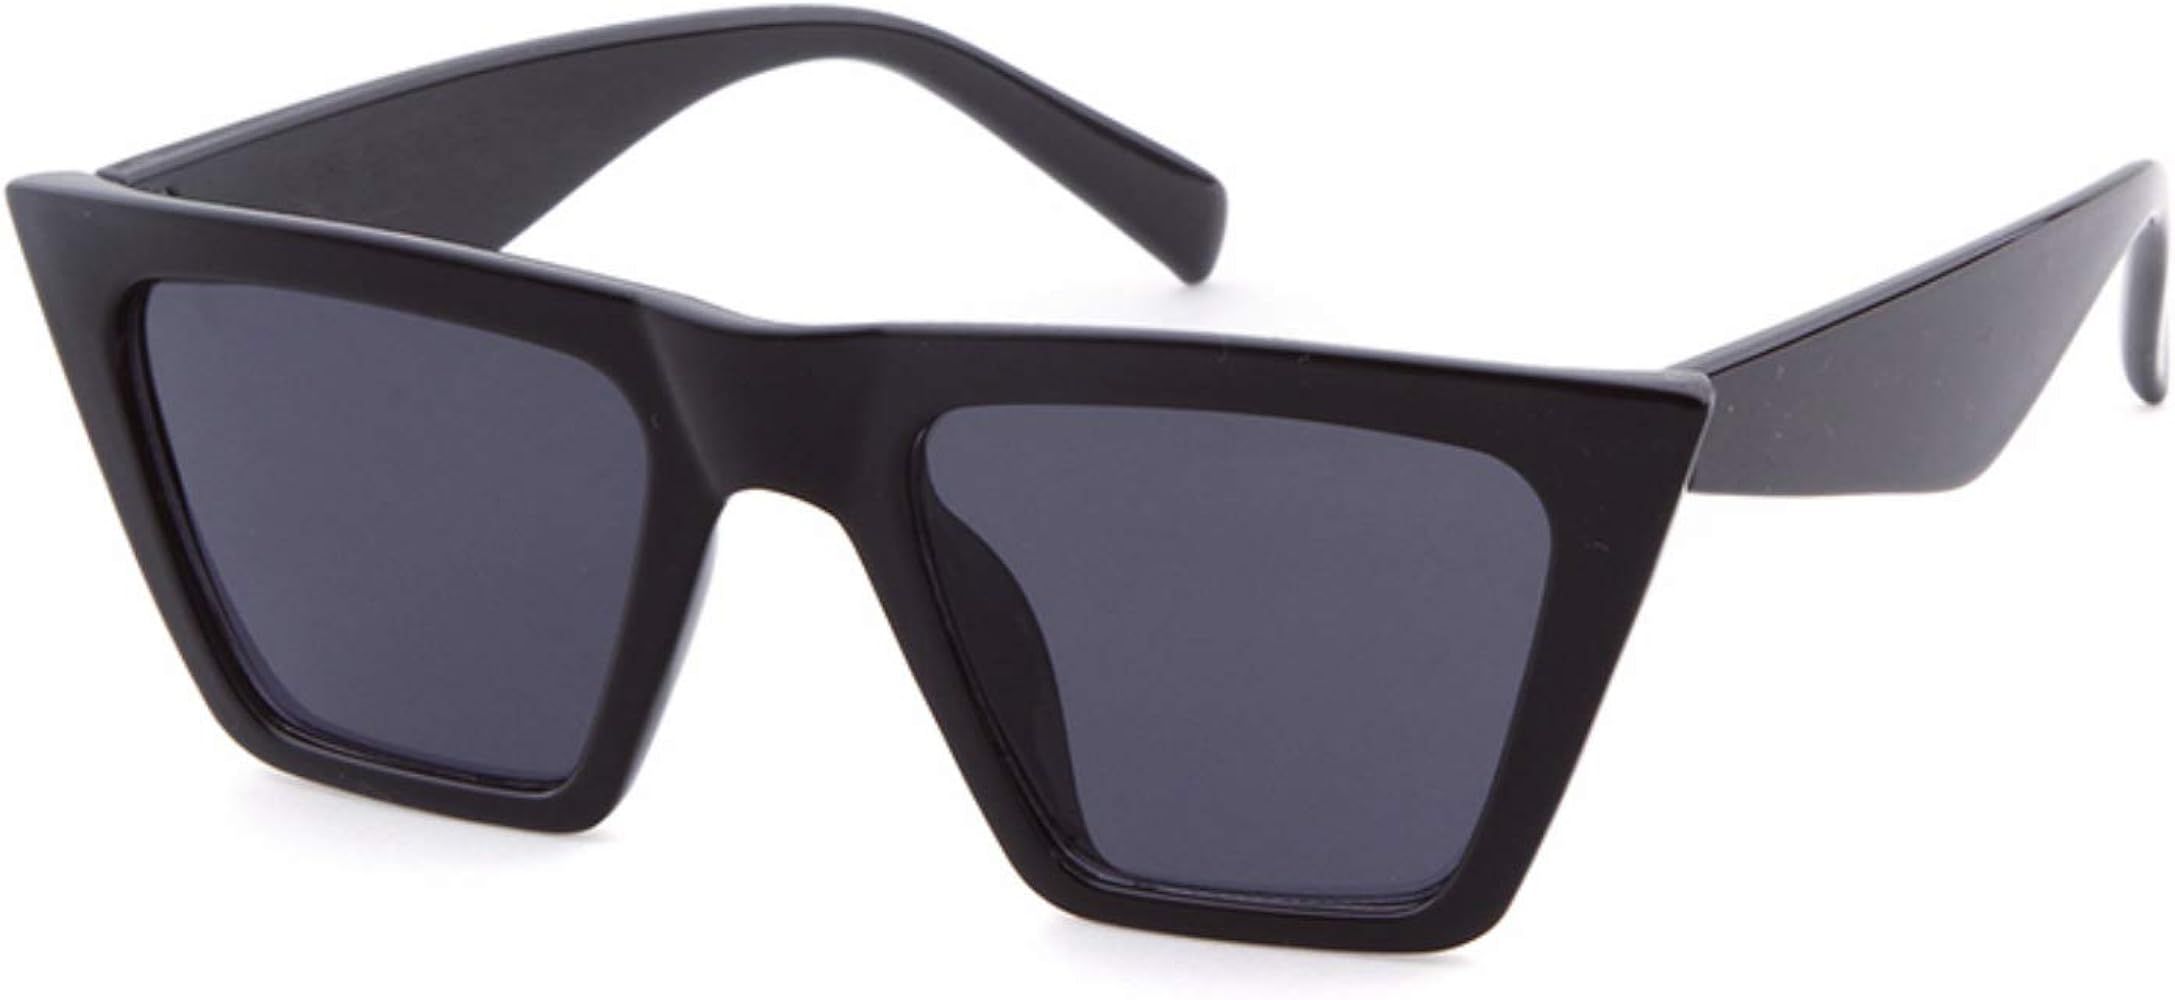 Vintage Sunglasses Retro Cateye Sunglasses for Women Men Square Frame | Amazon (US)